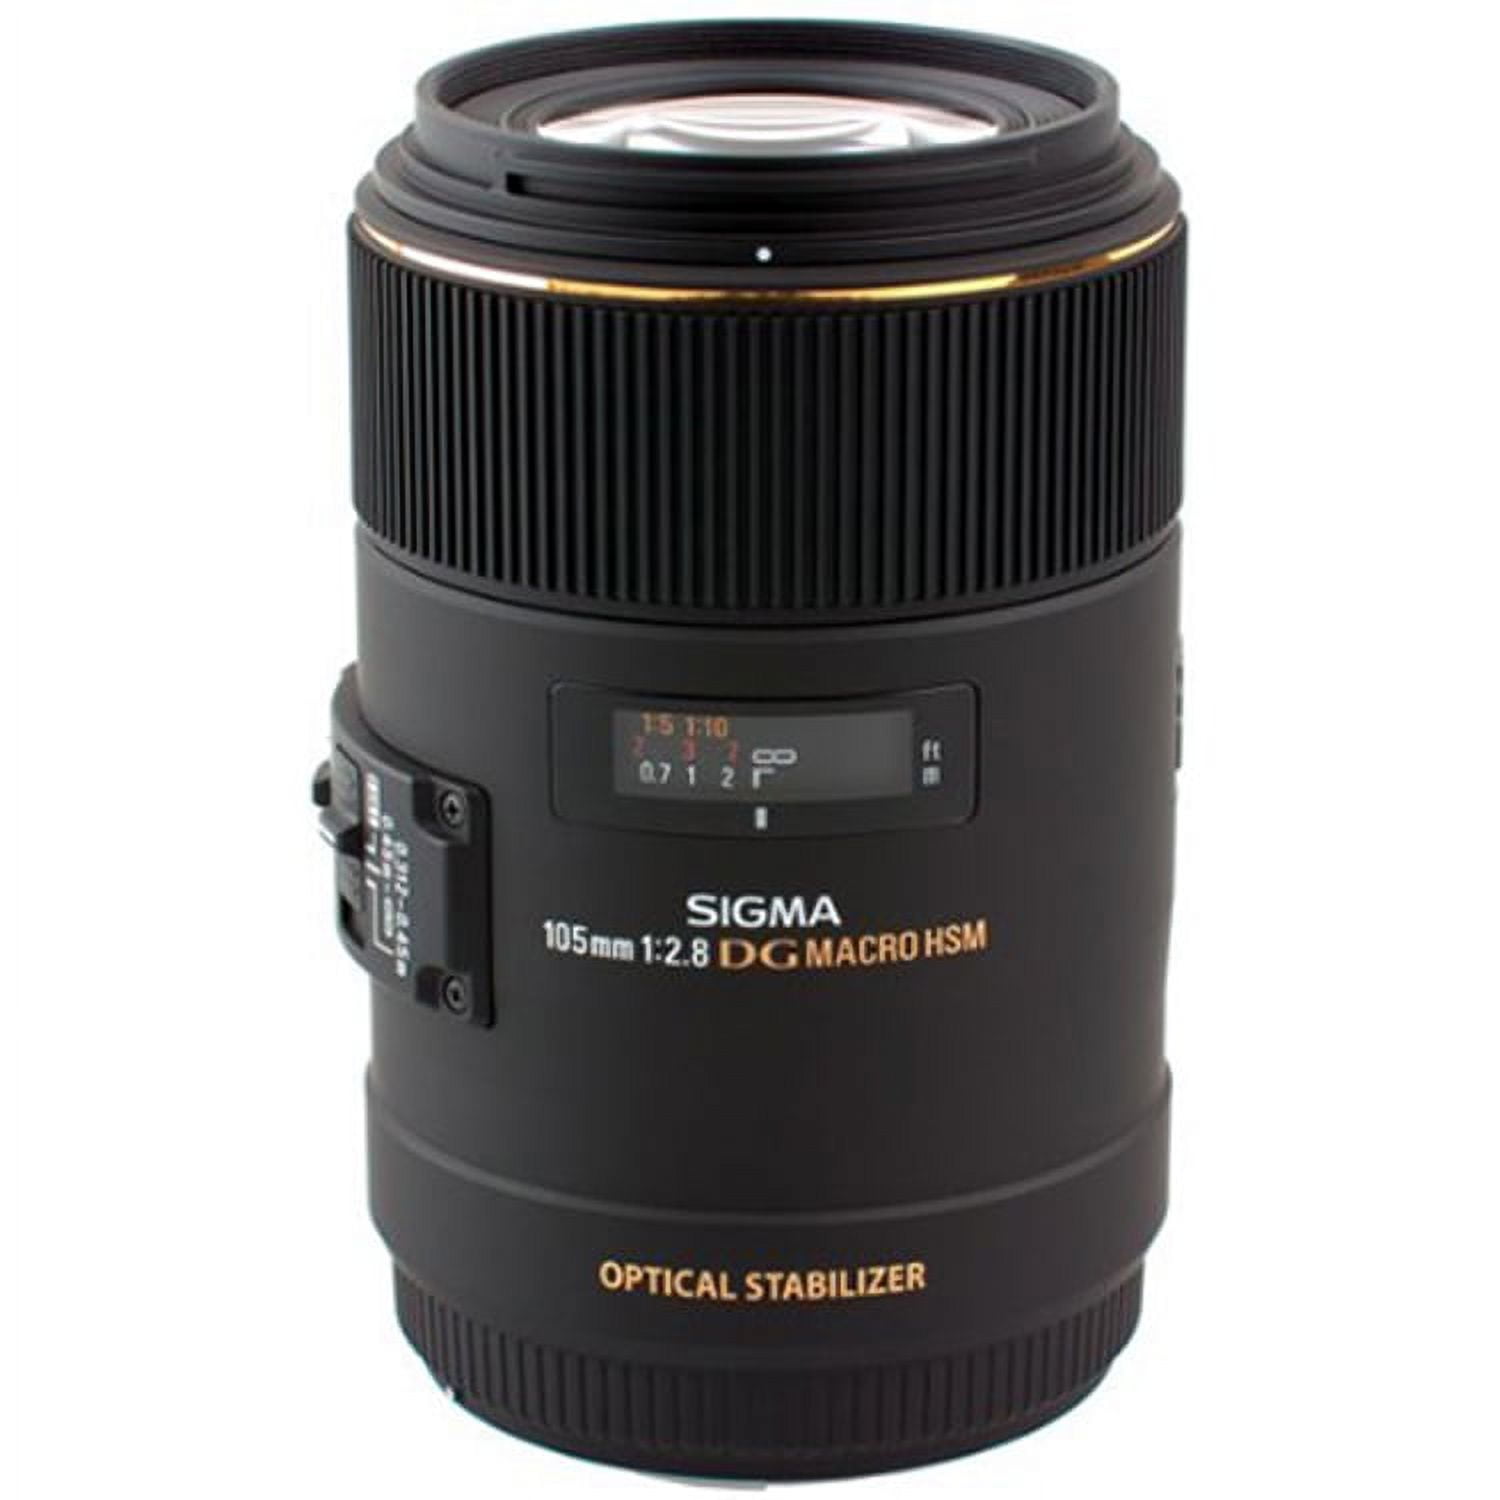 Sigma 105mm F2.8 EX DG OS HSM Macro Lens for Canon EOS DSLR (258